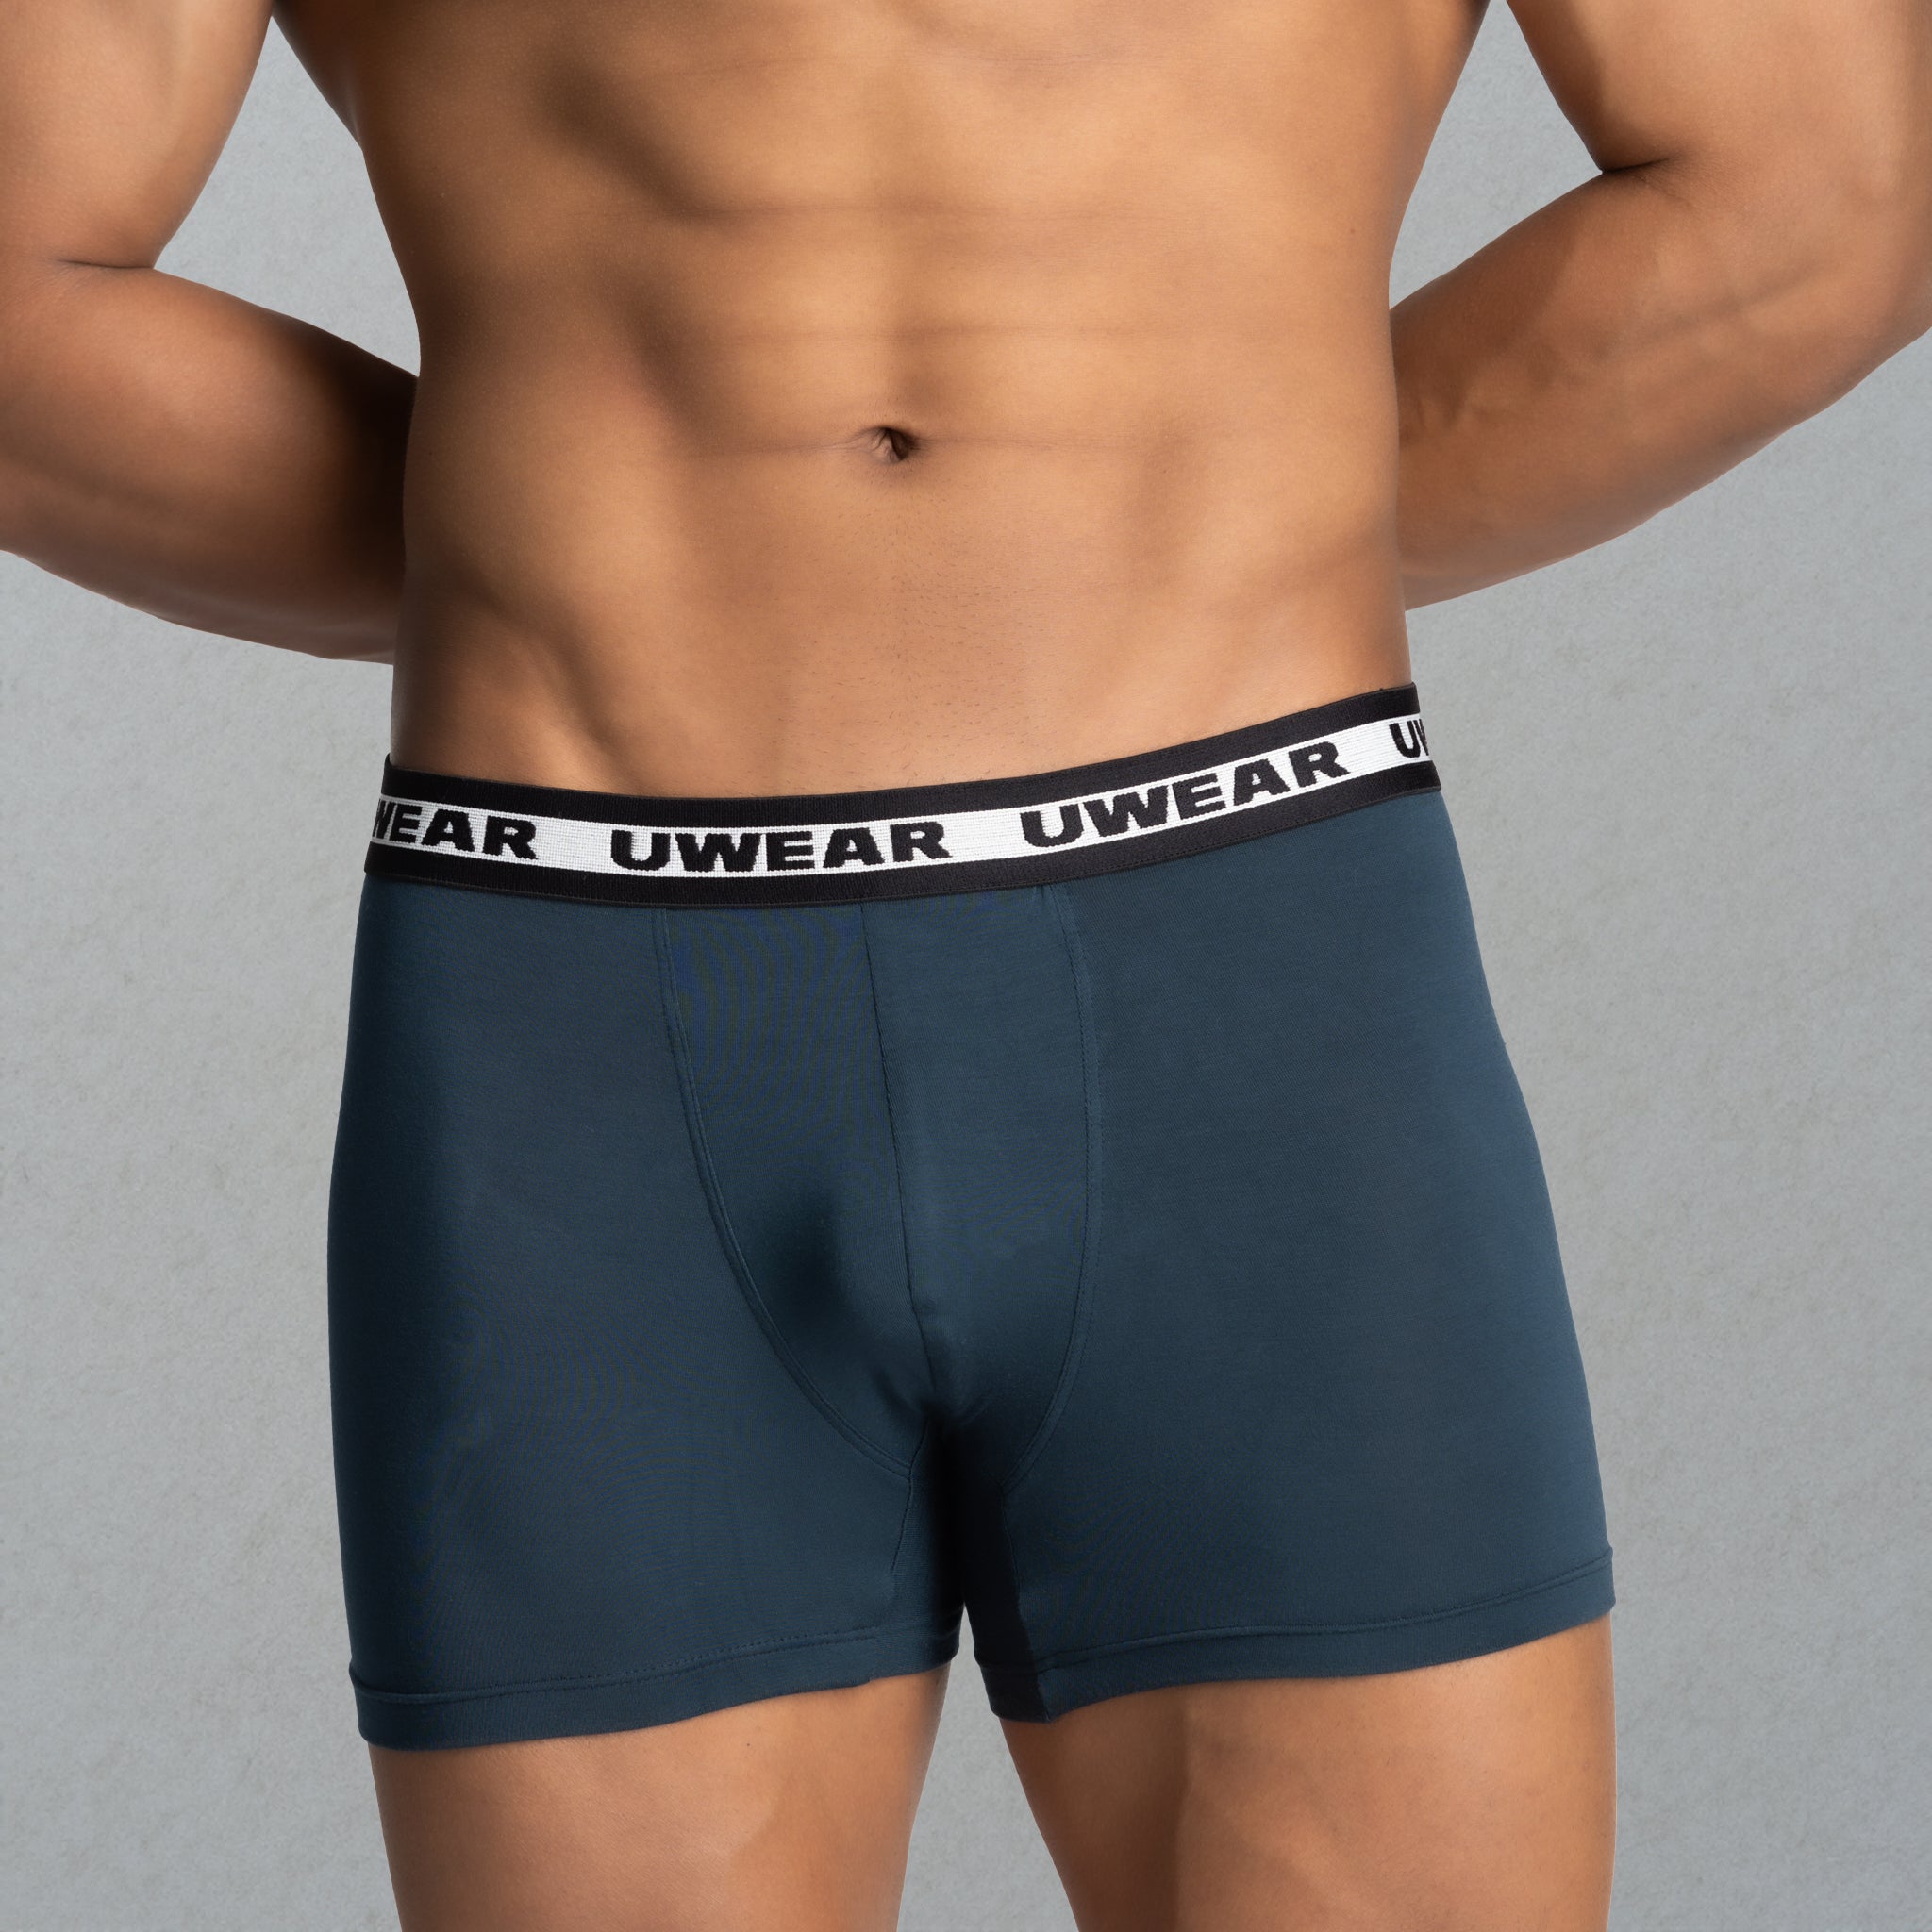 Captivating Teal: Premium Modal Men's Underwear with Midnight Band - UWEAR